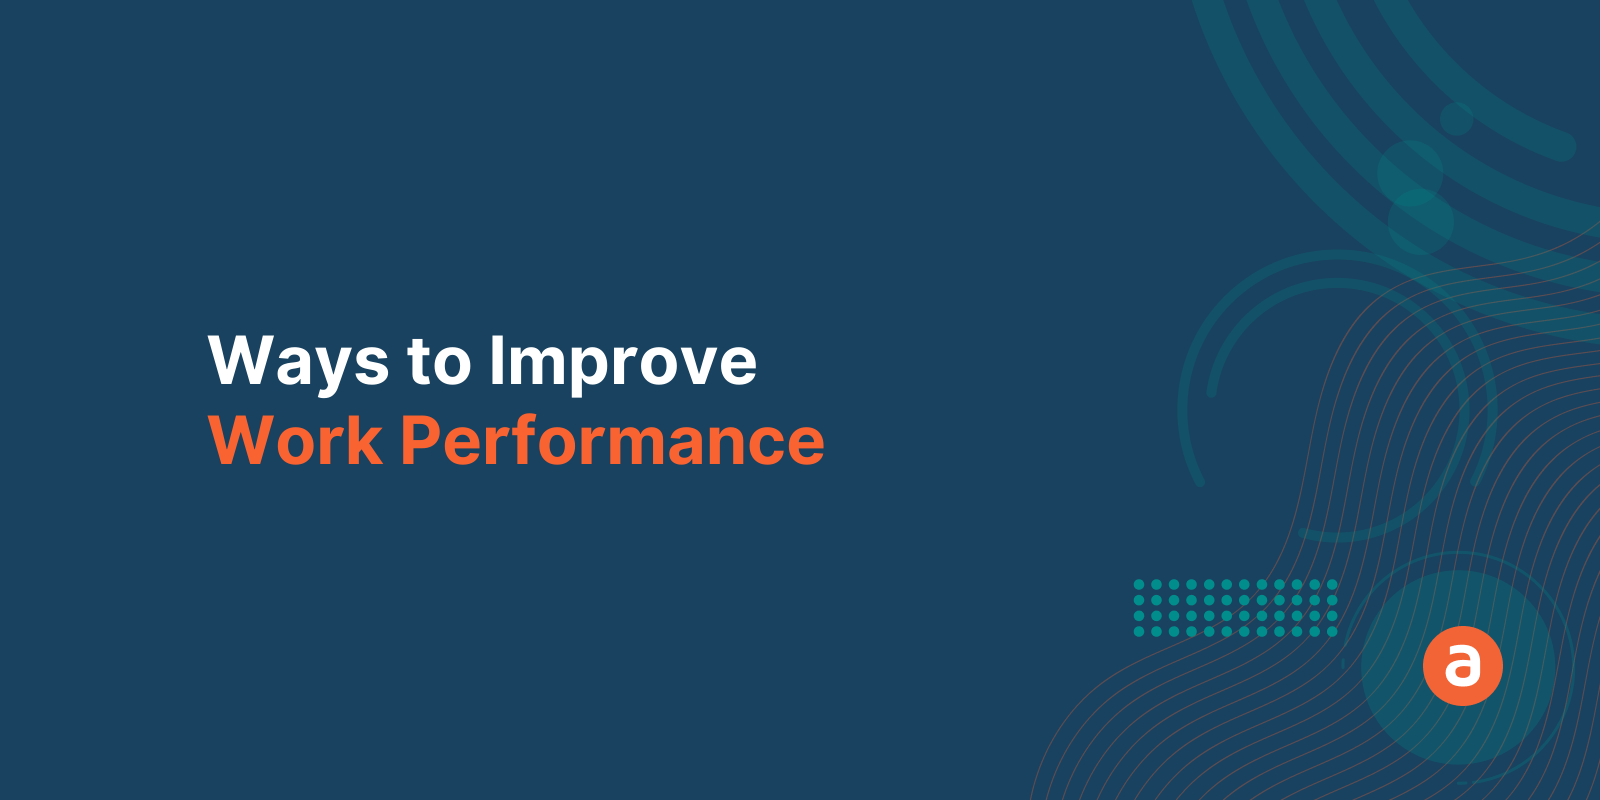 improve employee performance